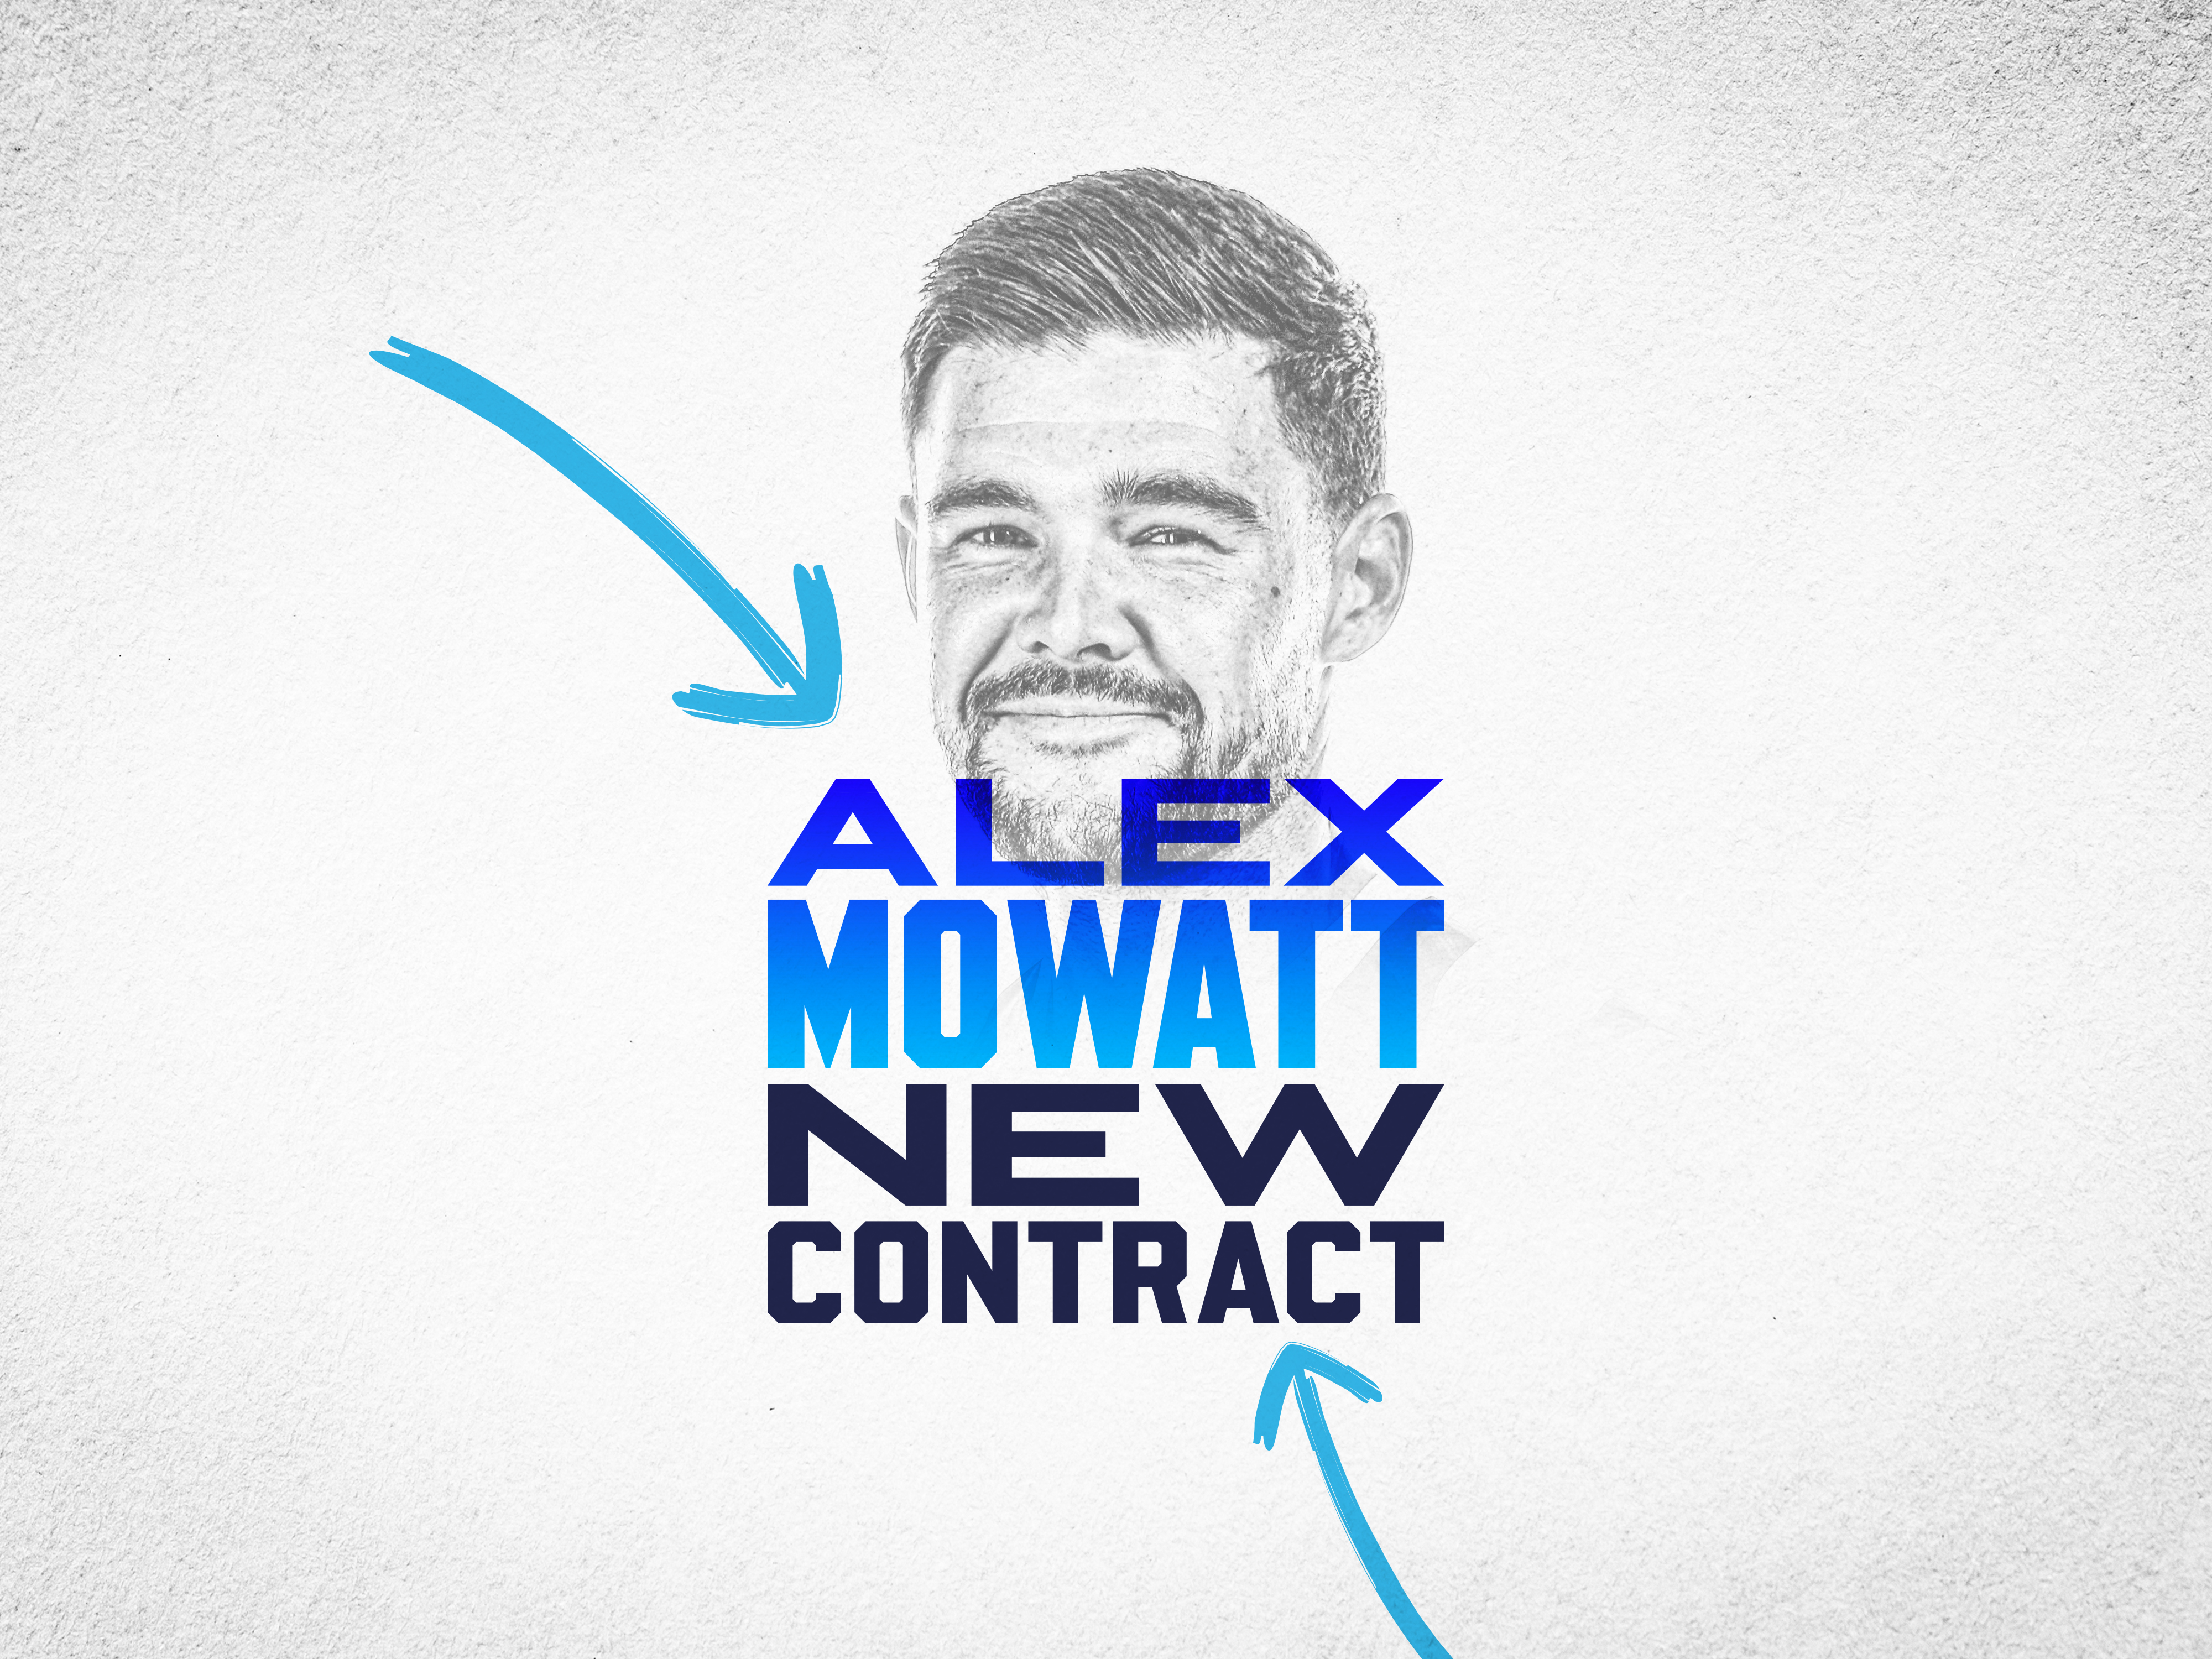 Alex Mowatt new contract graphic.